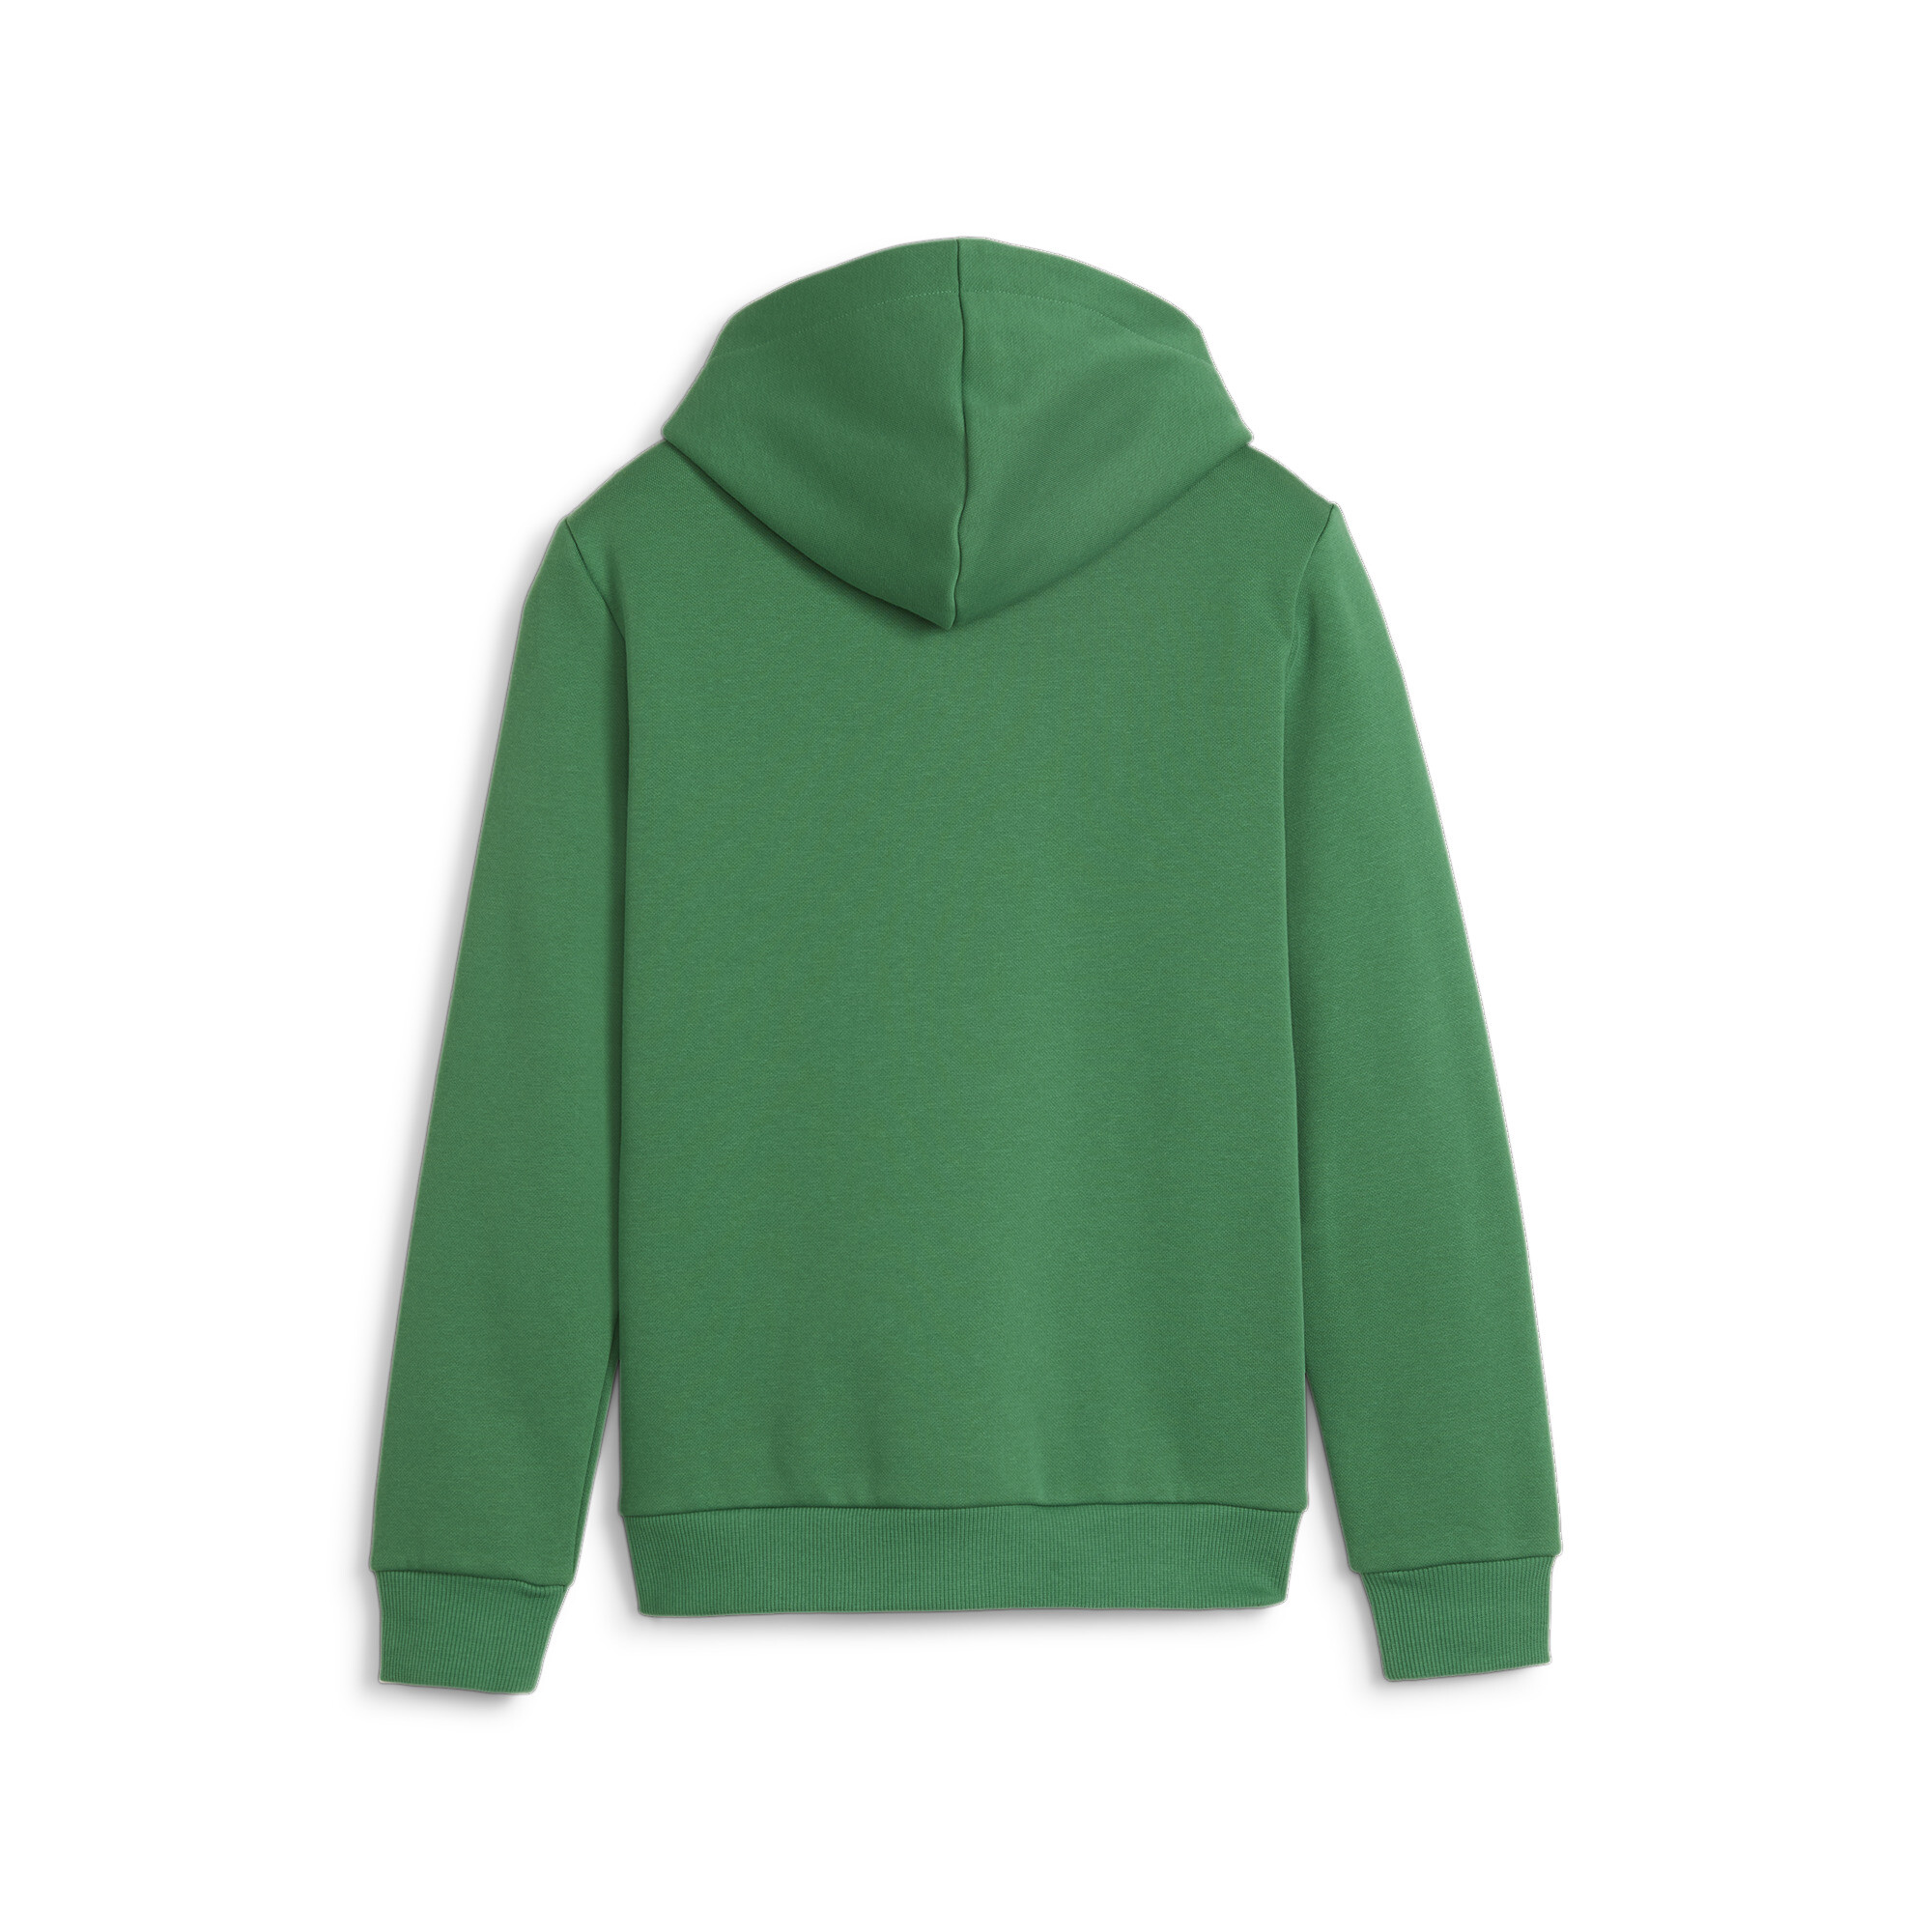 PUMA Essentials+ Two-Tone Big Logo Hoodie In Green, Size 15-16 Youth